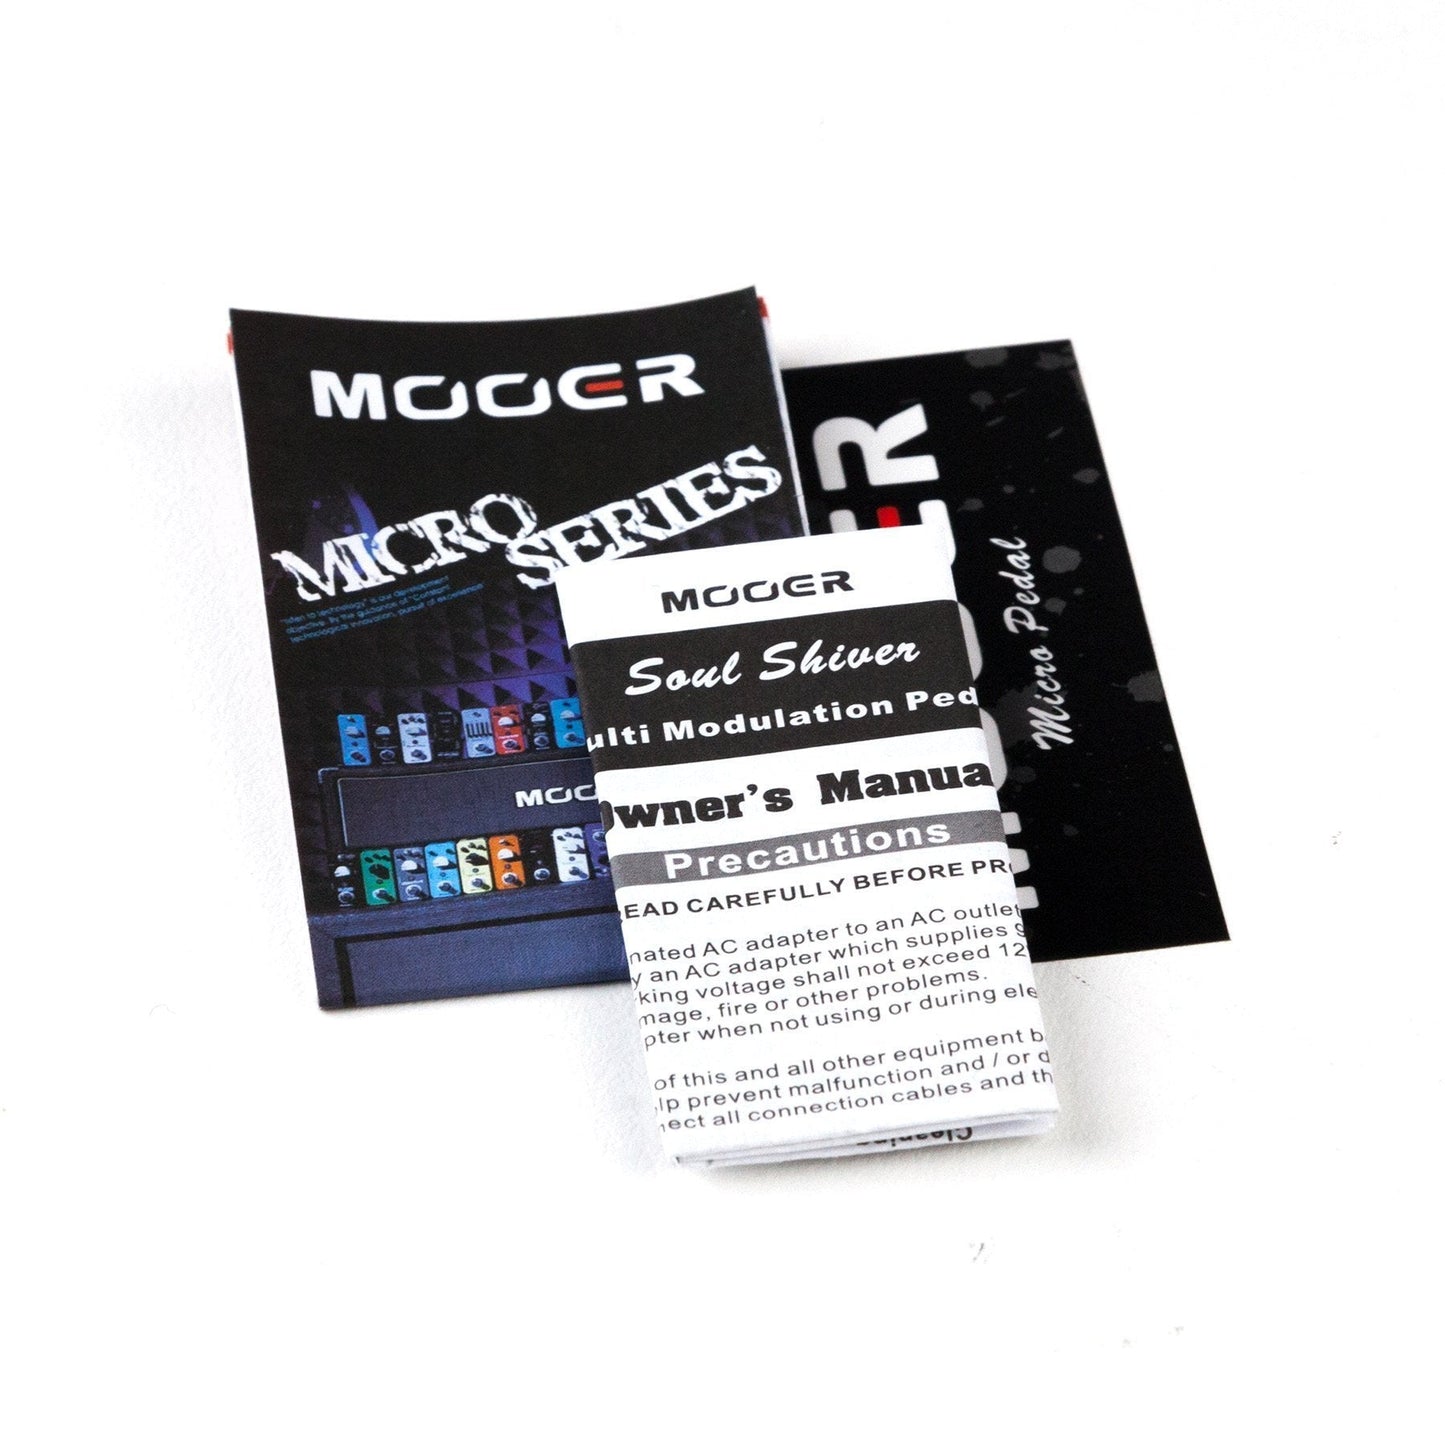 Mooer Soul Shiver Chorus, Vibrato & Rotary Micro Guitar Effects Pedal